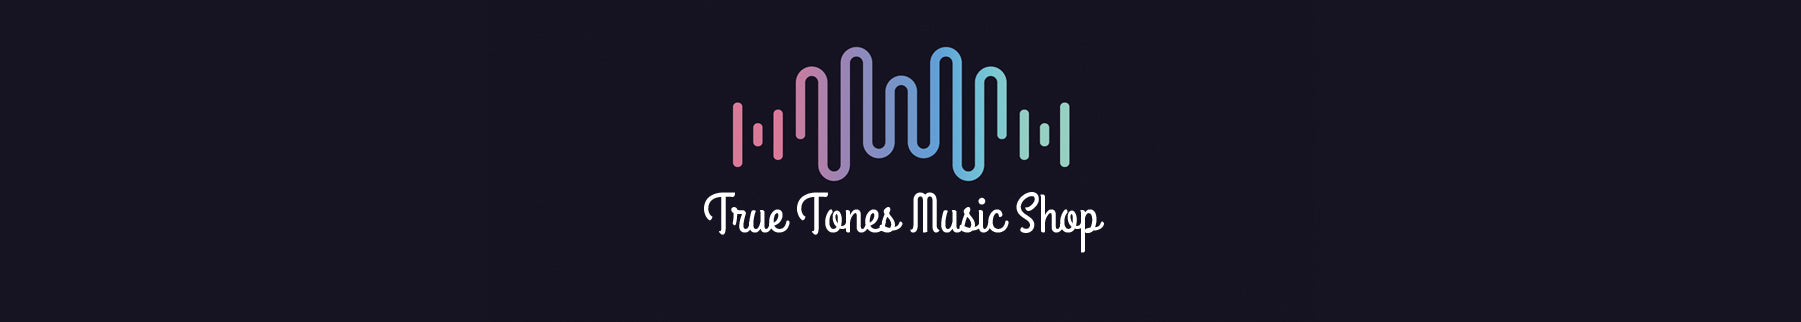 True Tones Music Shop